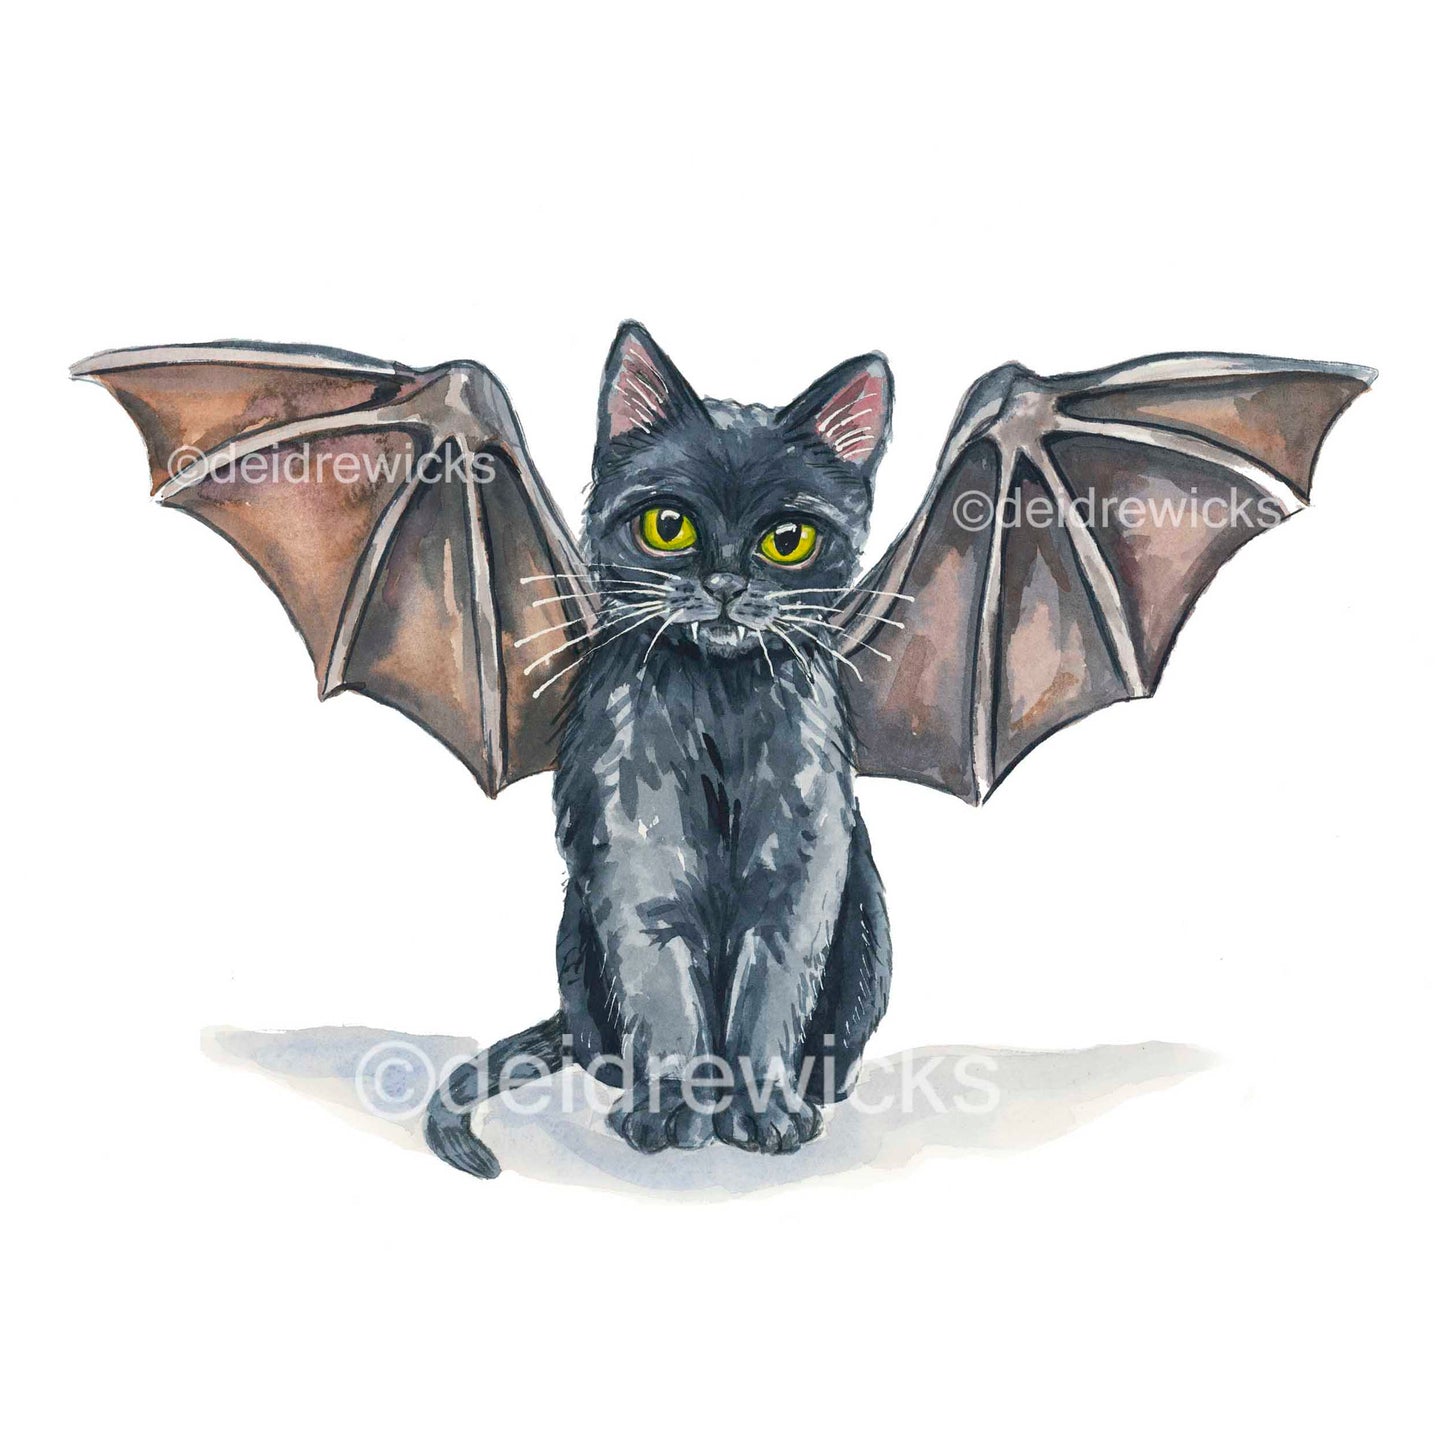 Watercolour painting of a little black cat wearing bat wings